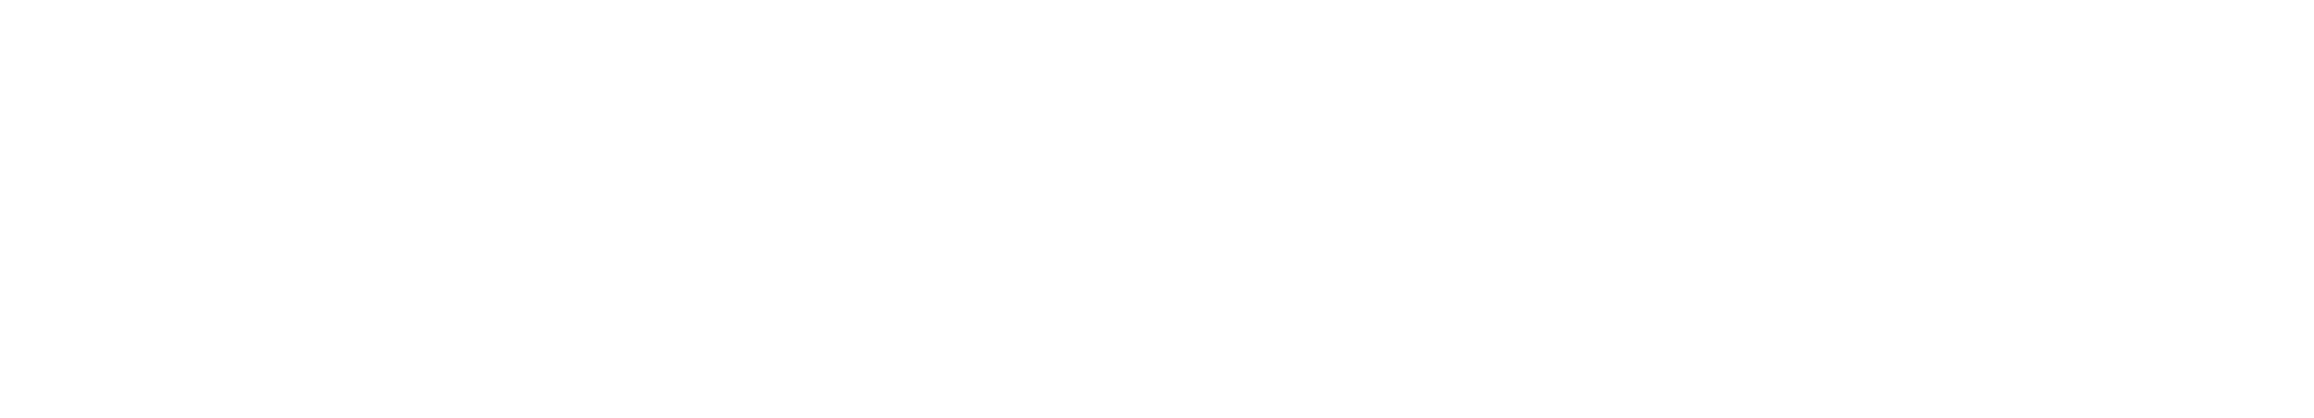 appd-logo